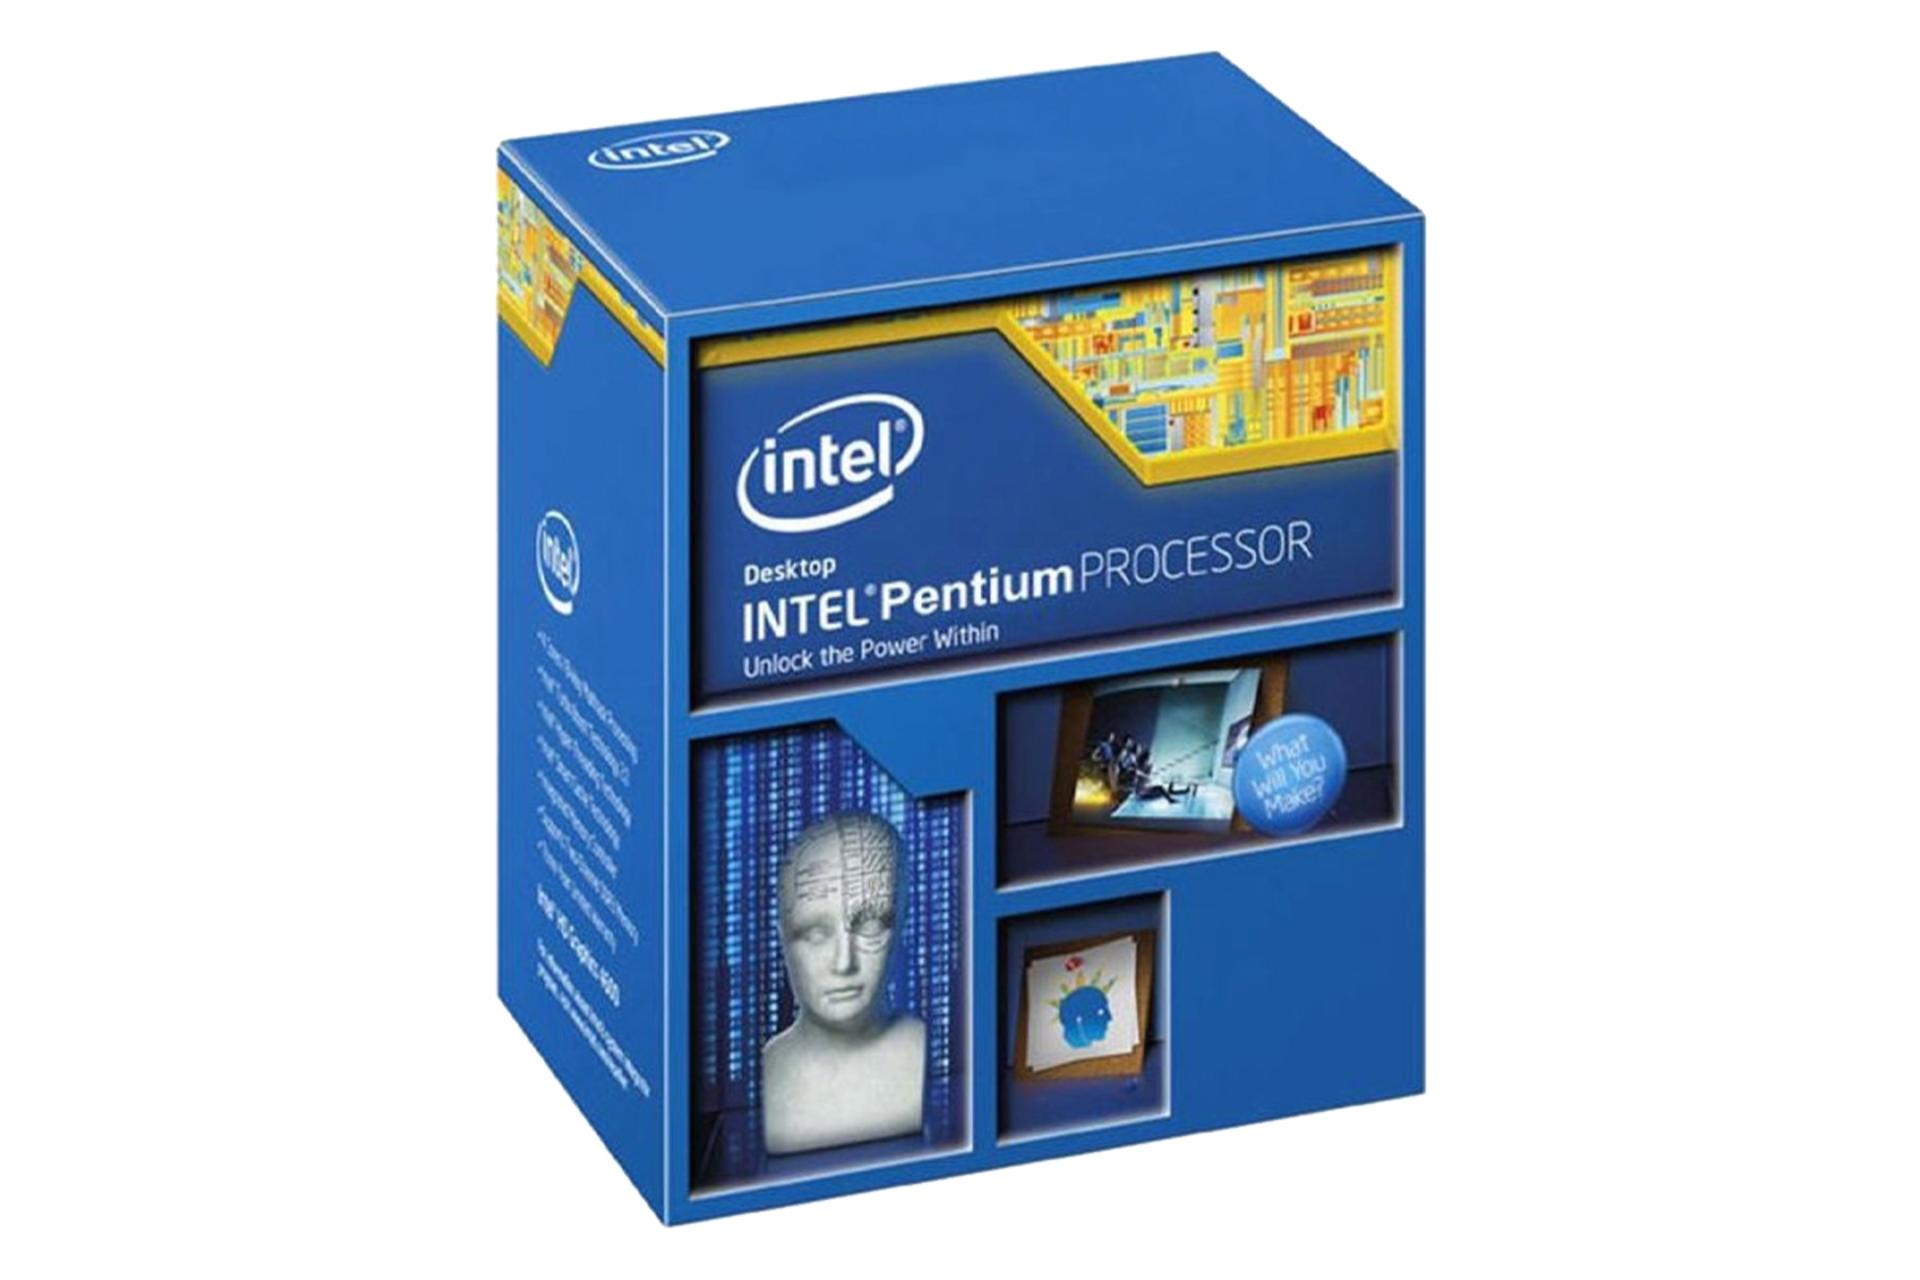  Intel Pentium G3220 / پنتیوم G3220 اینتل